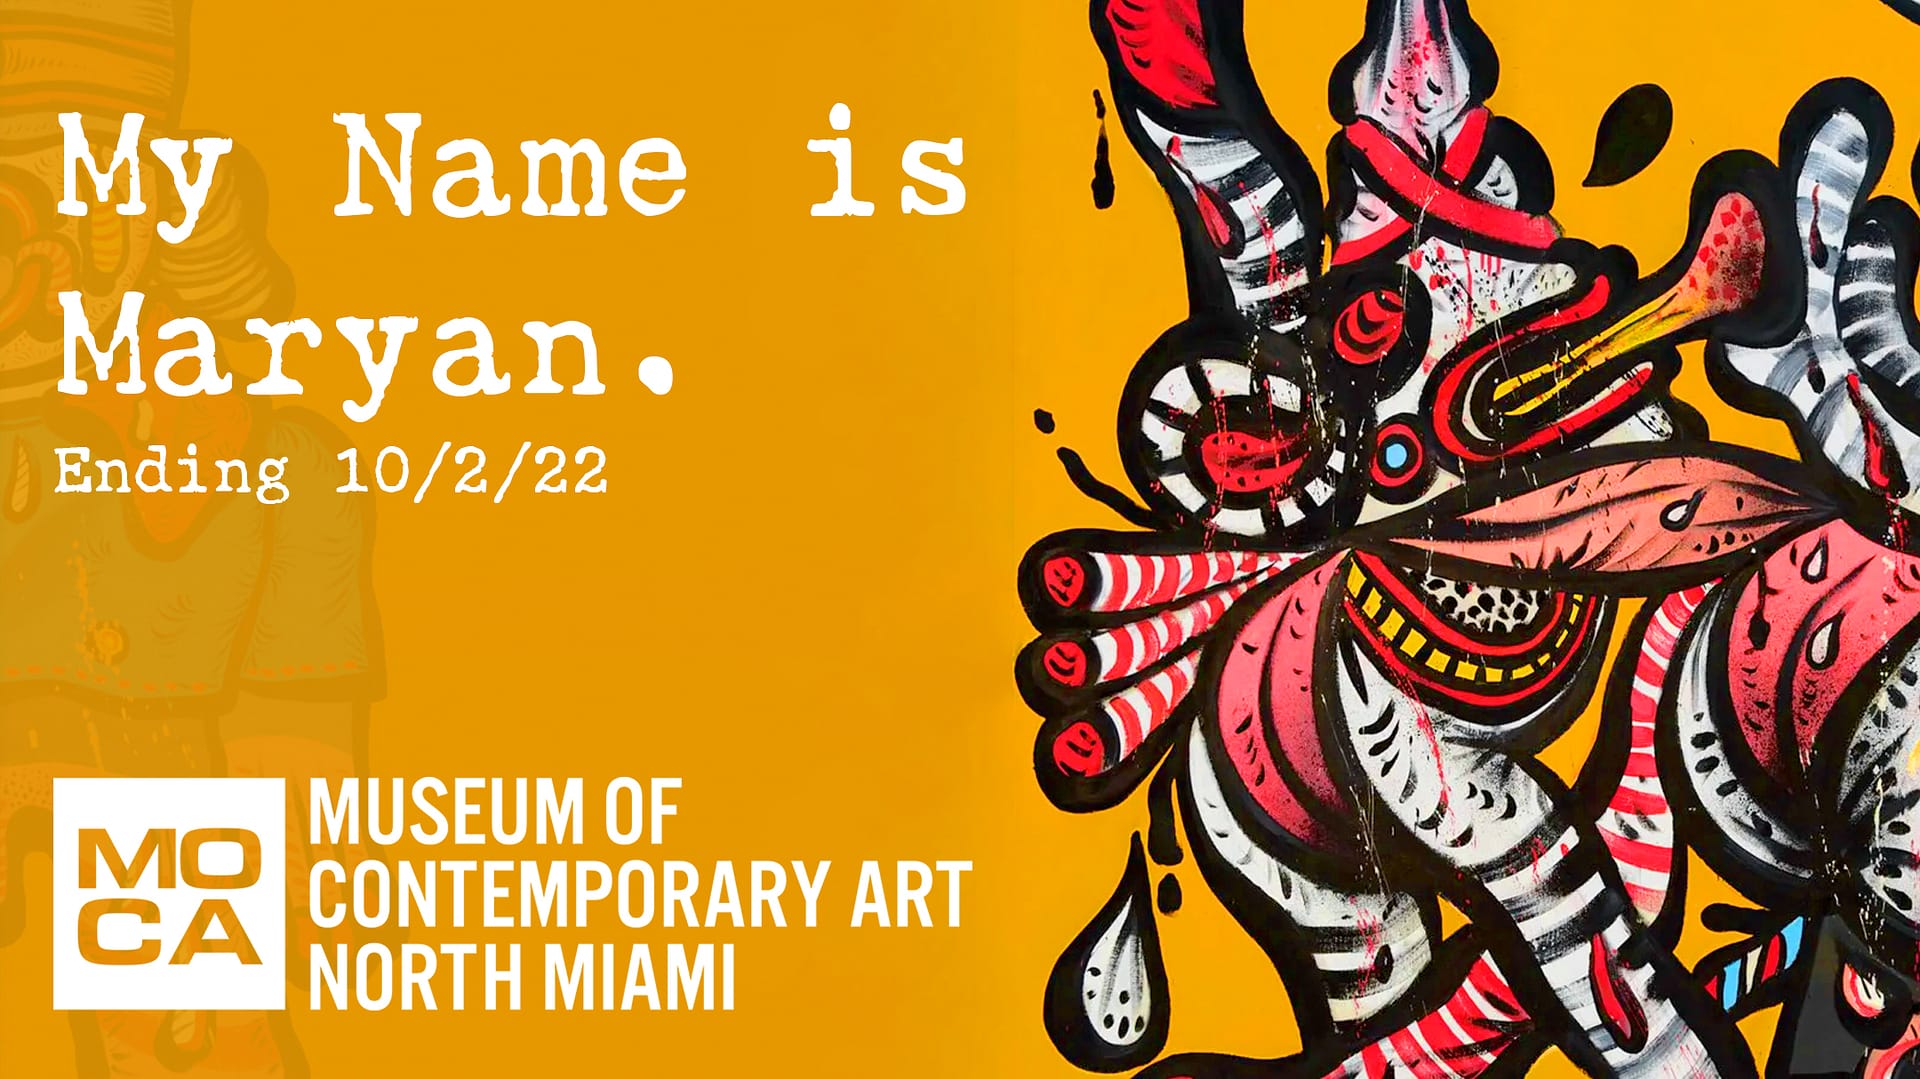 My Name is Maryan art exhibition at MOCA North Miami. A review by Nicole Maynard